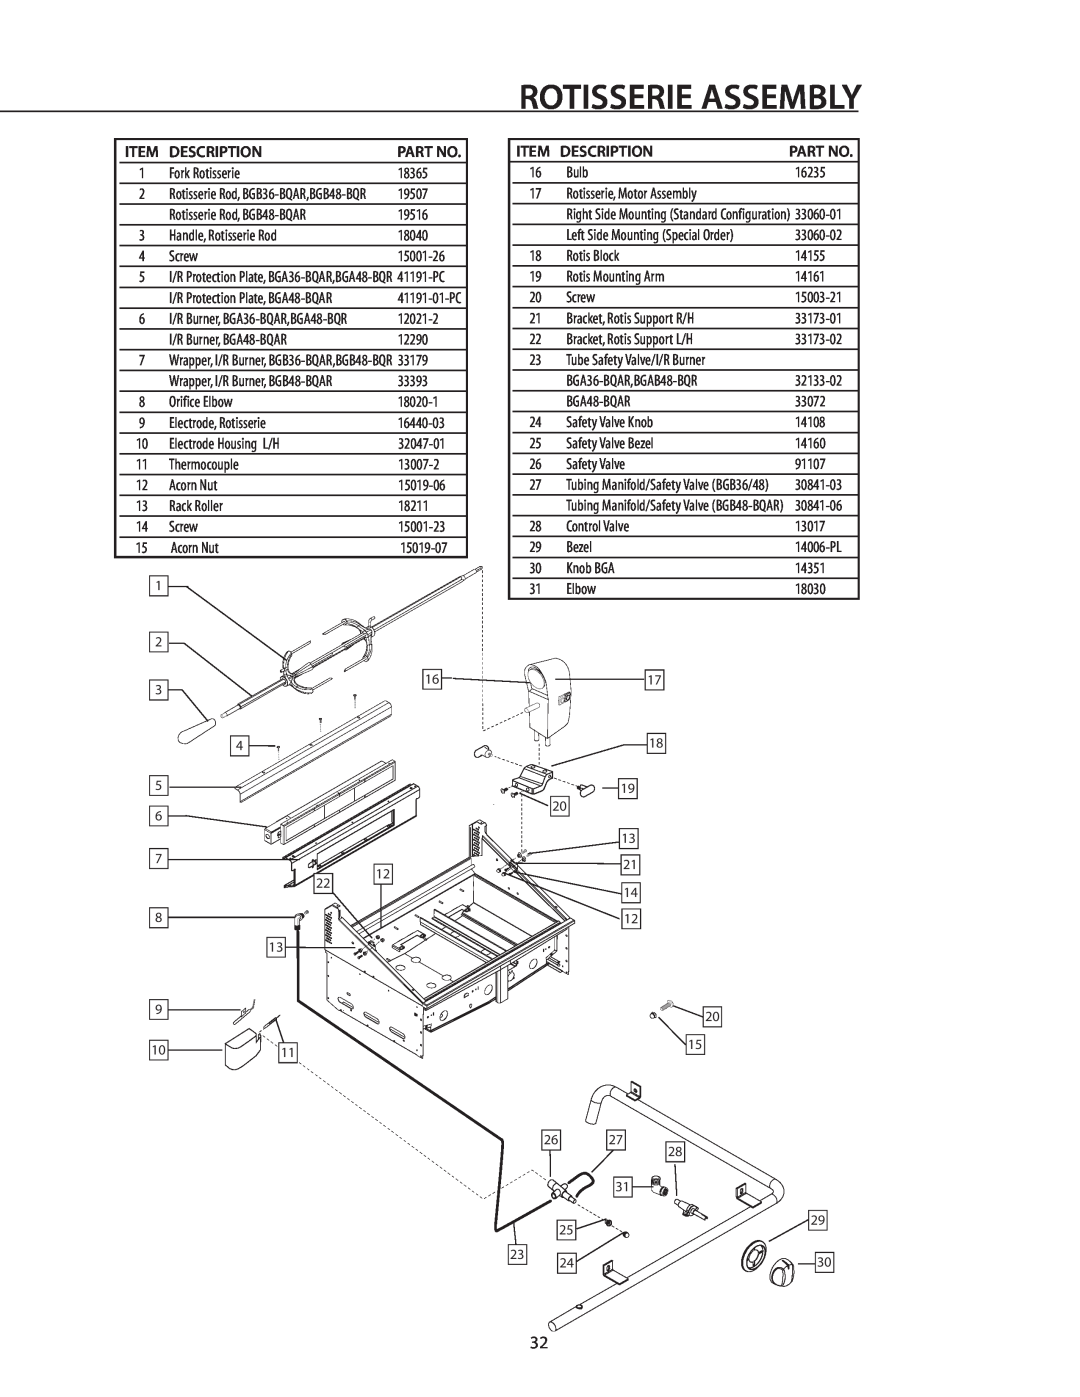 DCS BGB36-BQAR manual Rotisserie Assembly 